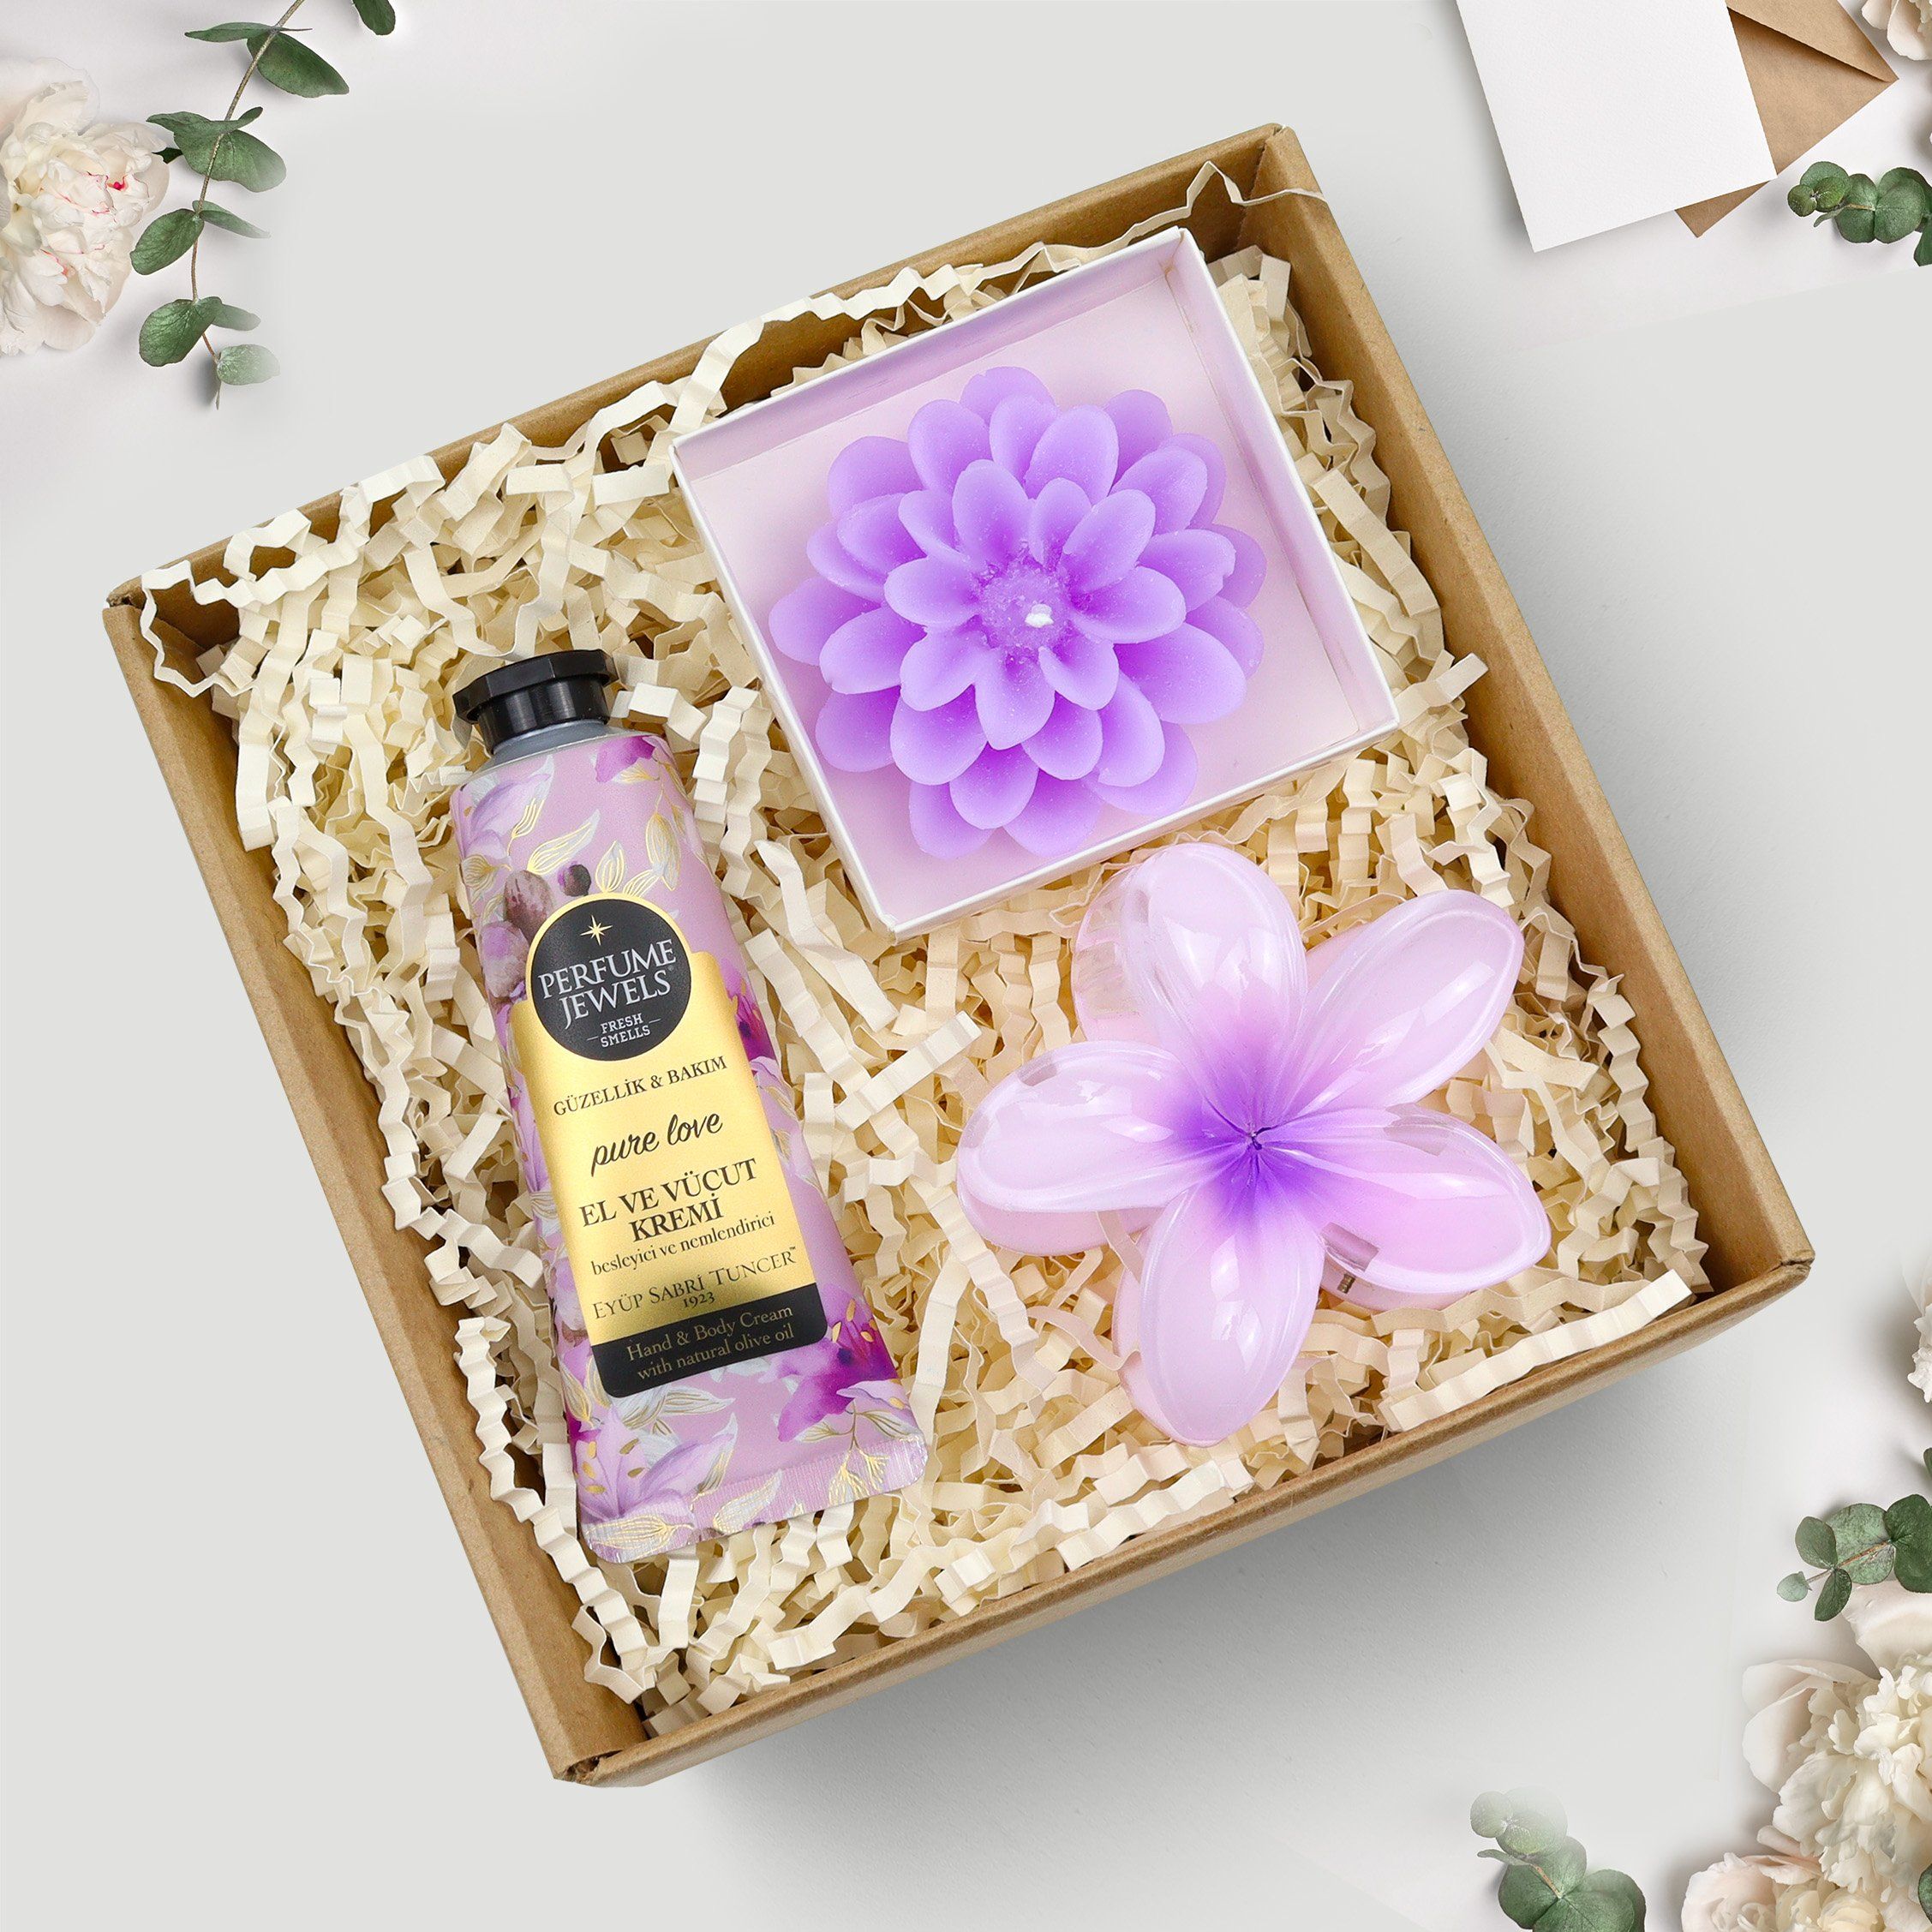 Lotus Toka & Lotus Çiçeği Mum & Eyüp Sabri Tuncer El Kremi Hediye Seti